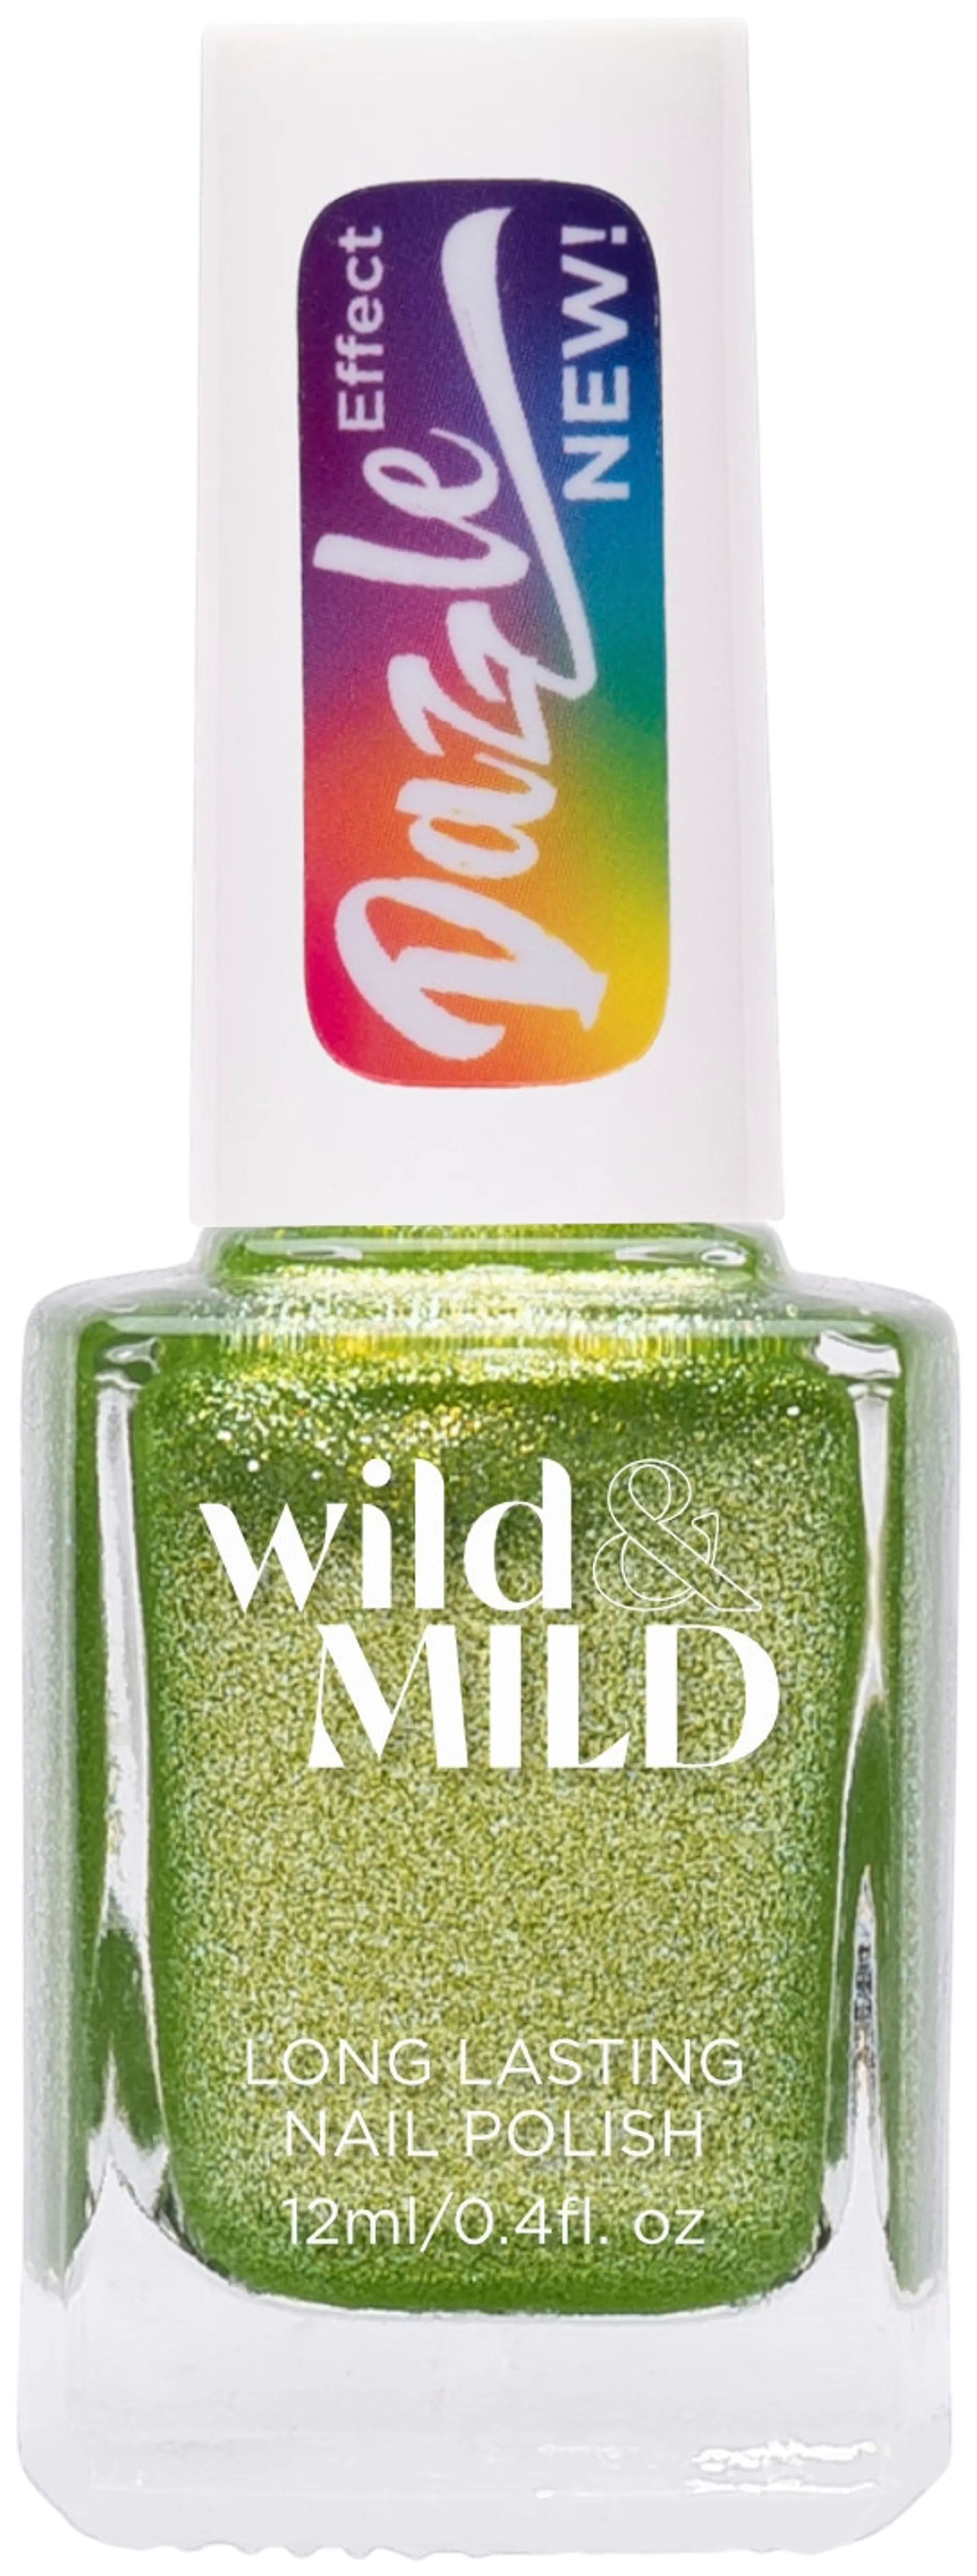 Wild&Mild Dazzle Effect nail polish DA02 Silent Retreat 12 ml